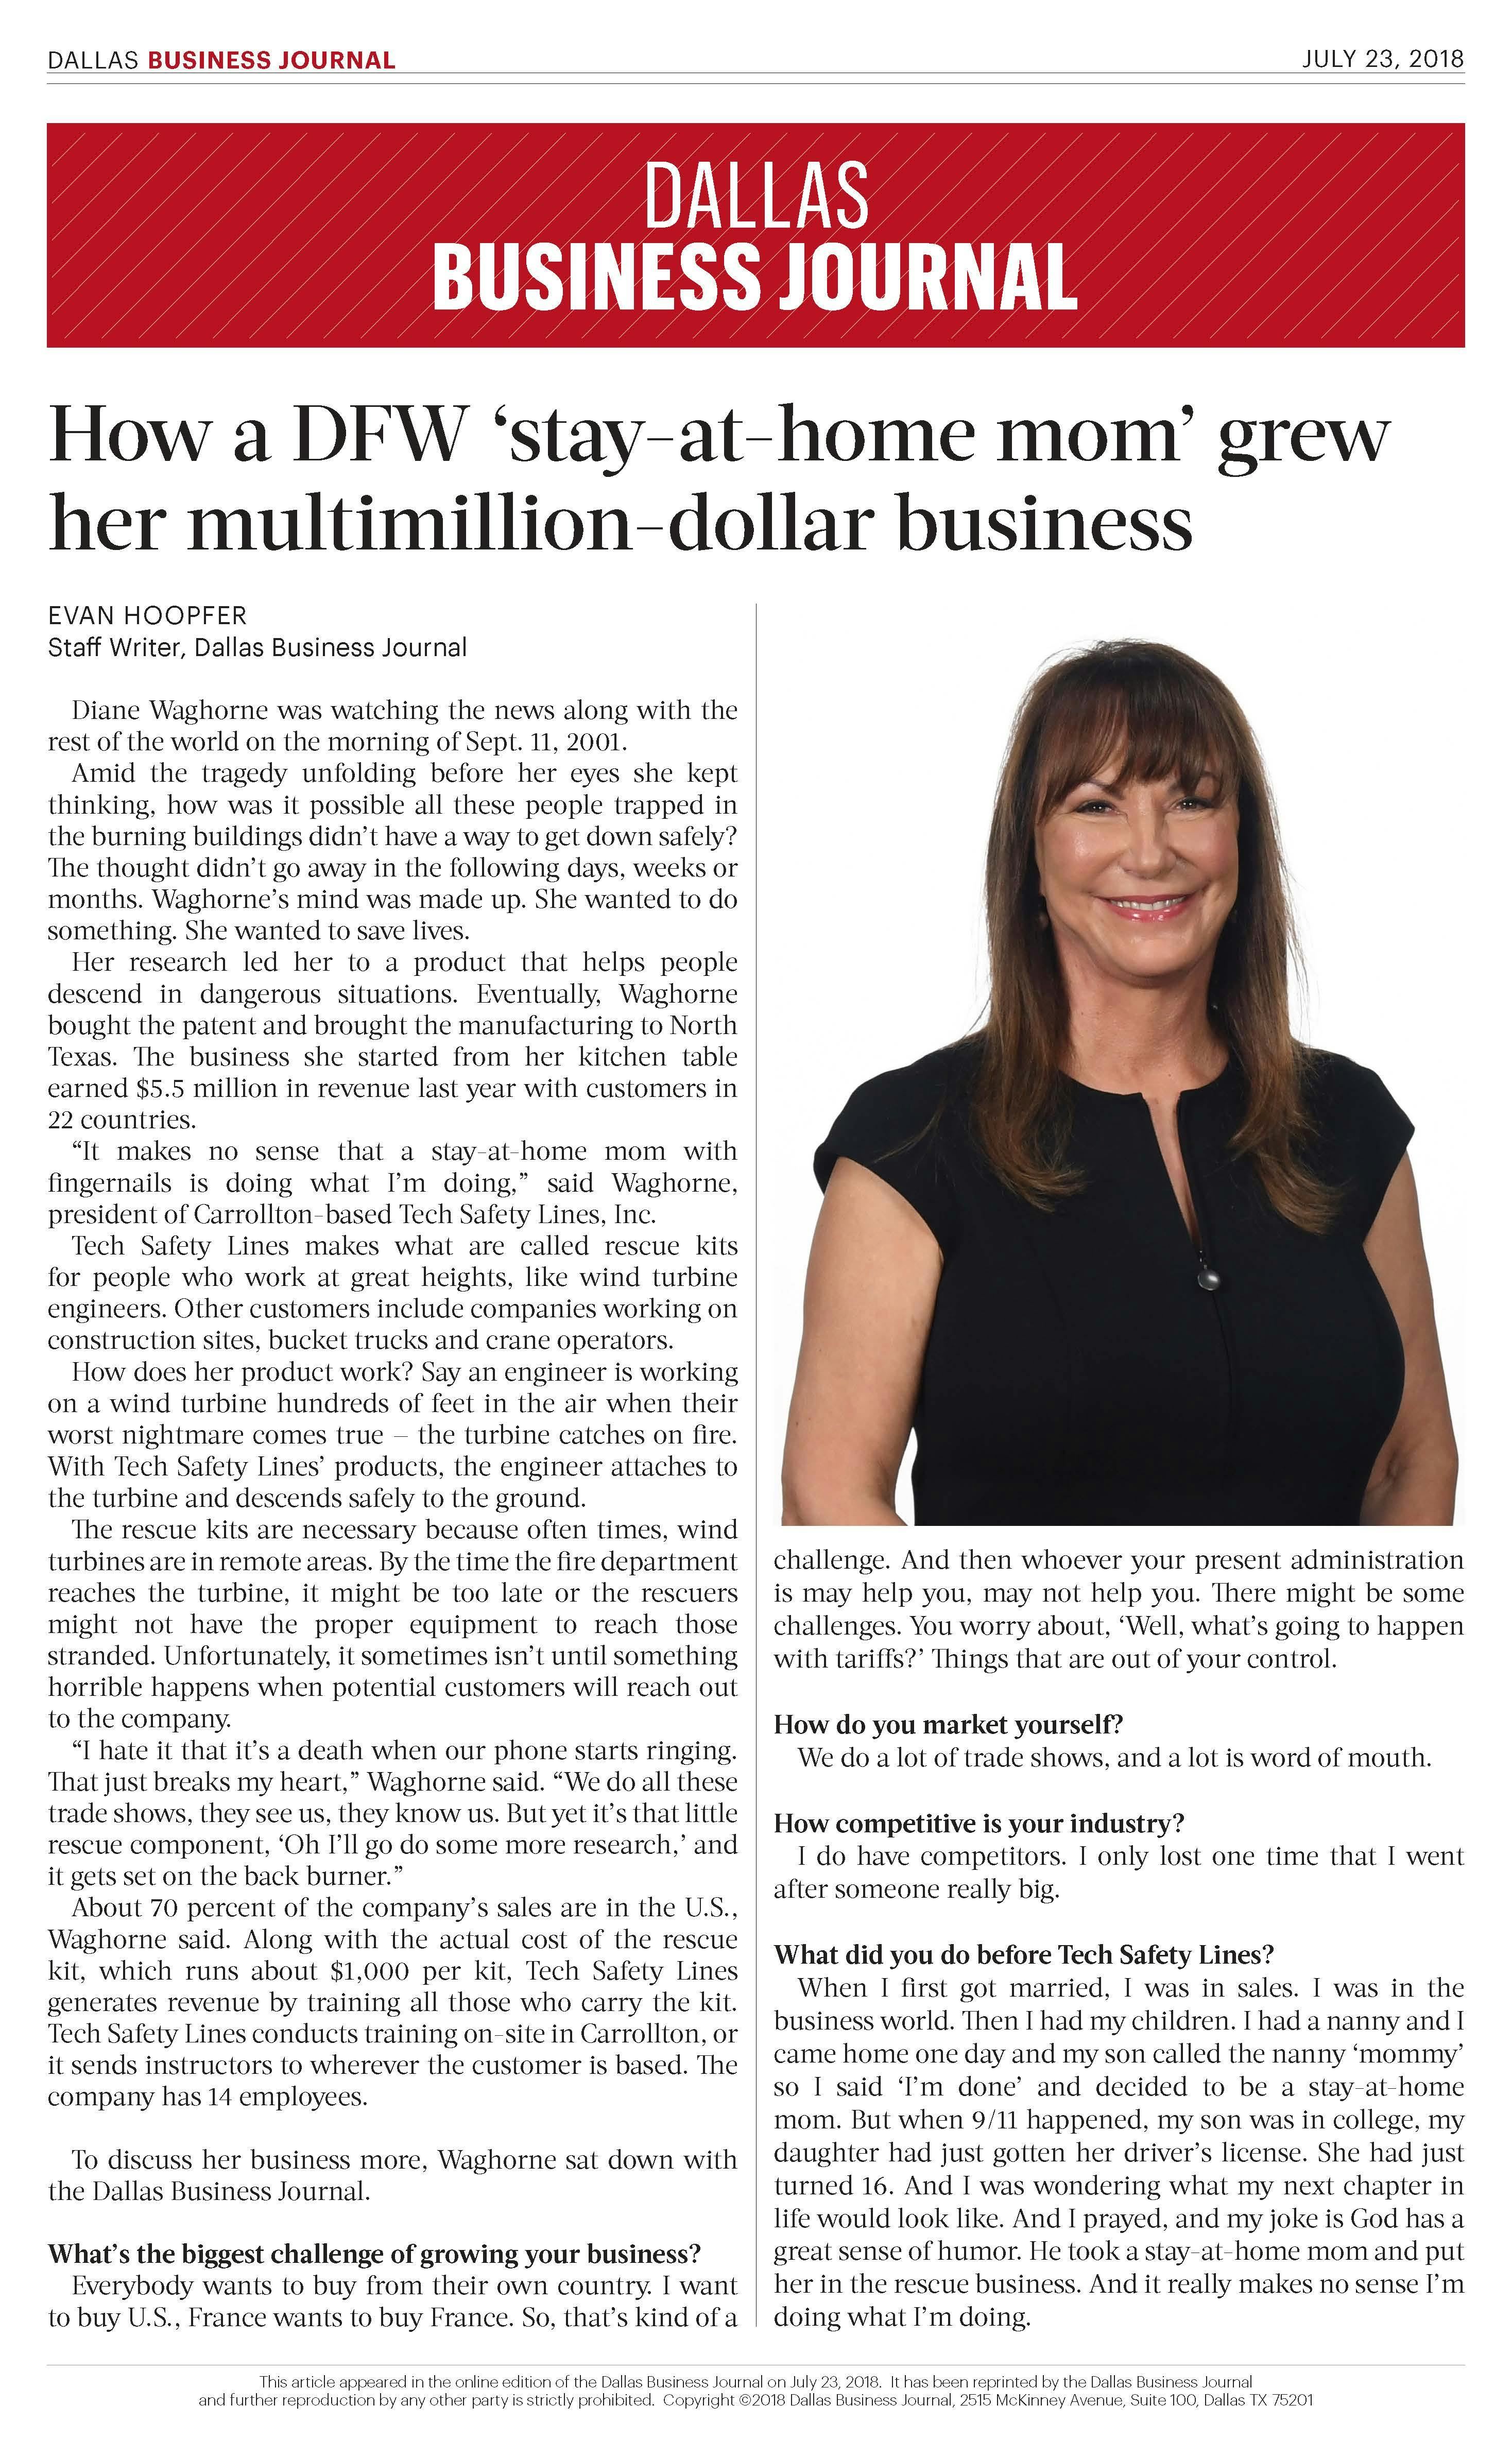 Dallas Business Journal TSL Feature